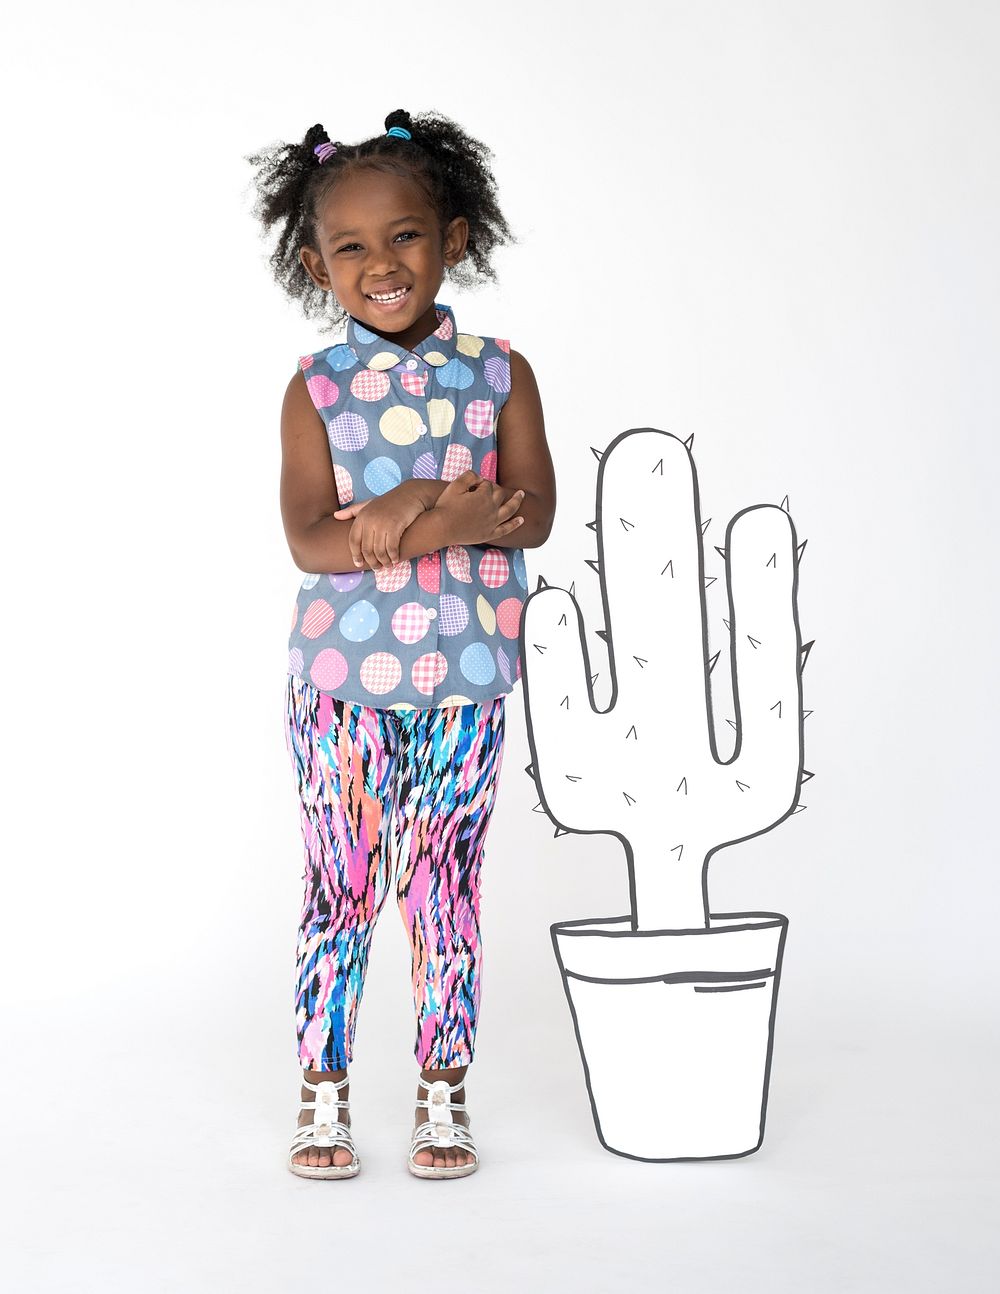 Little Girl Smiling Happiness Paper Craft Arts Cactus Studio Portrait